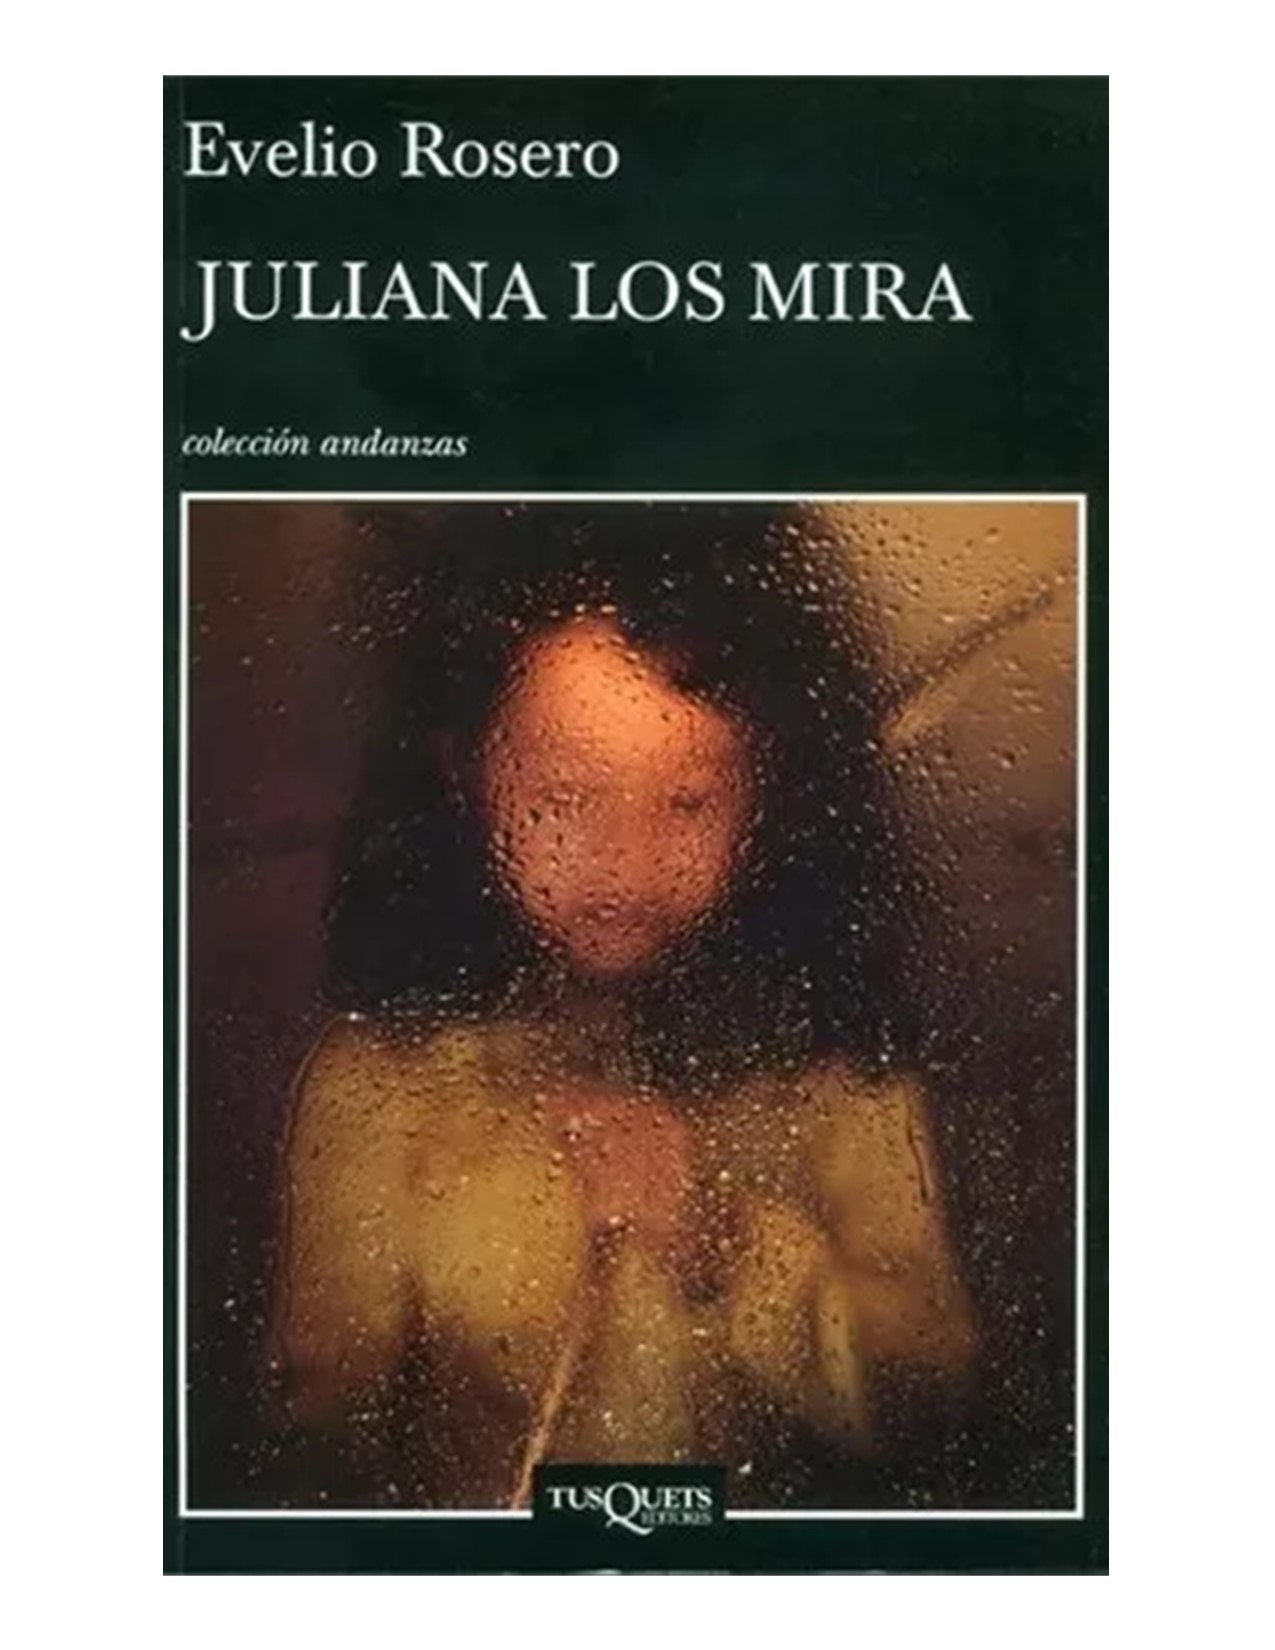 Juliana Los Mira - Evelio Rosero (1)